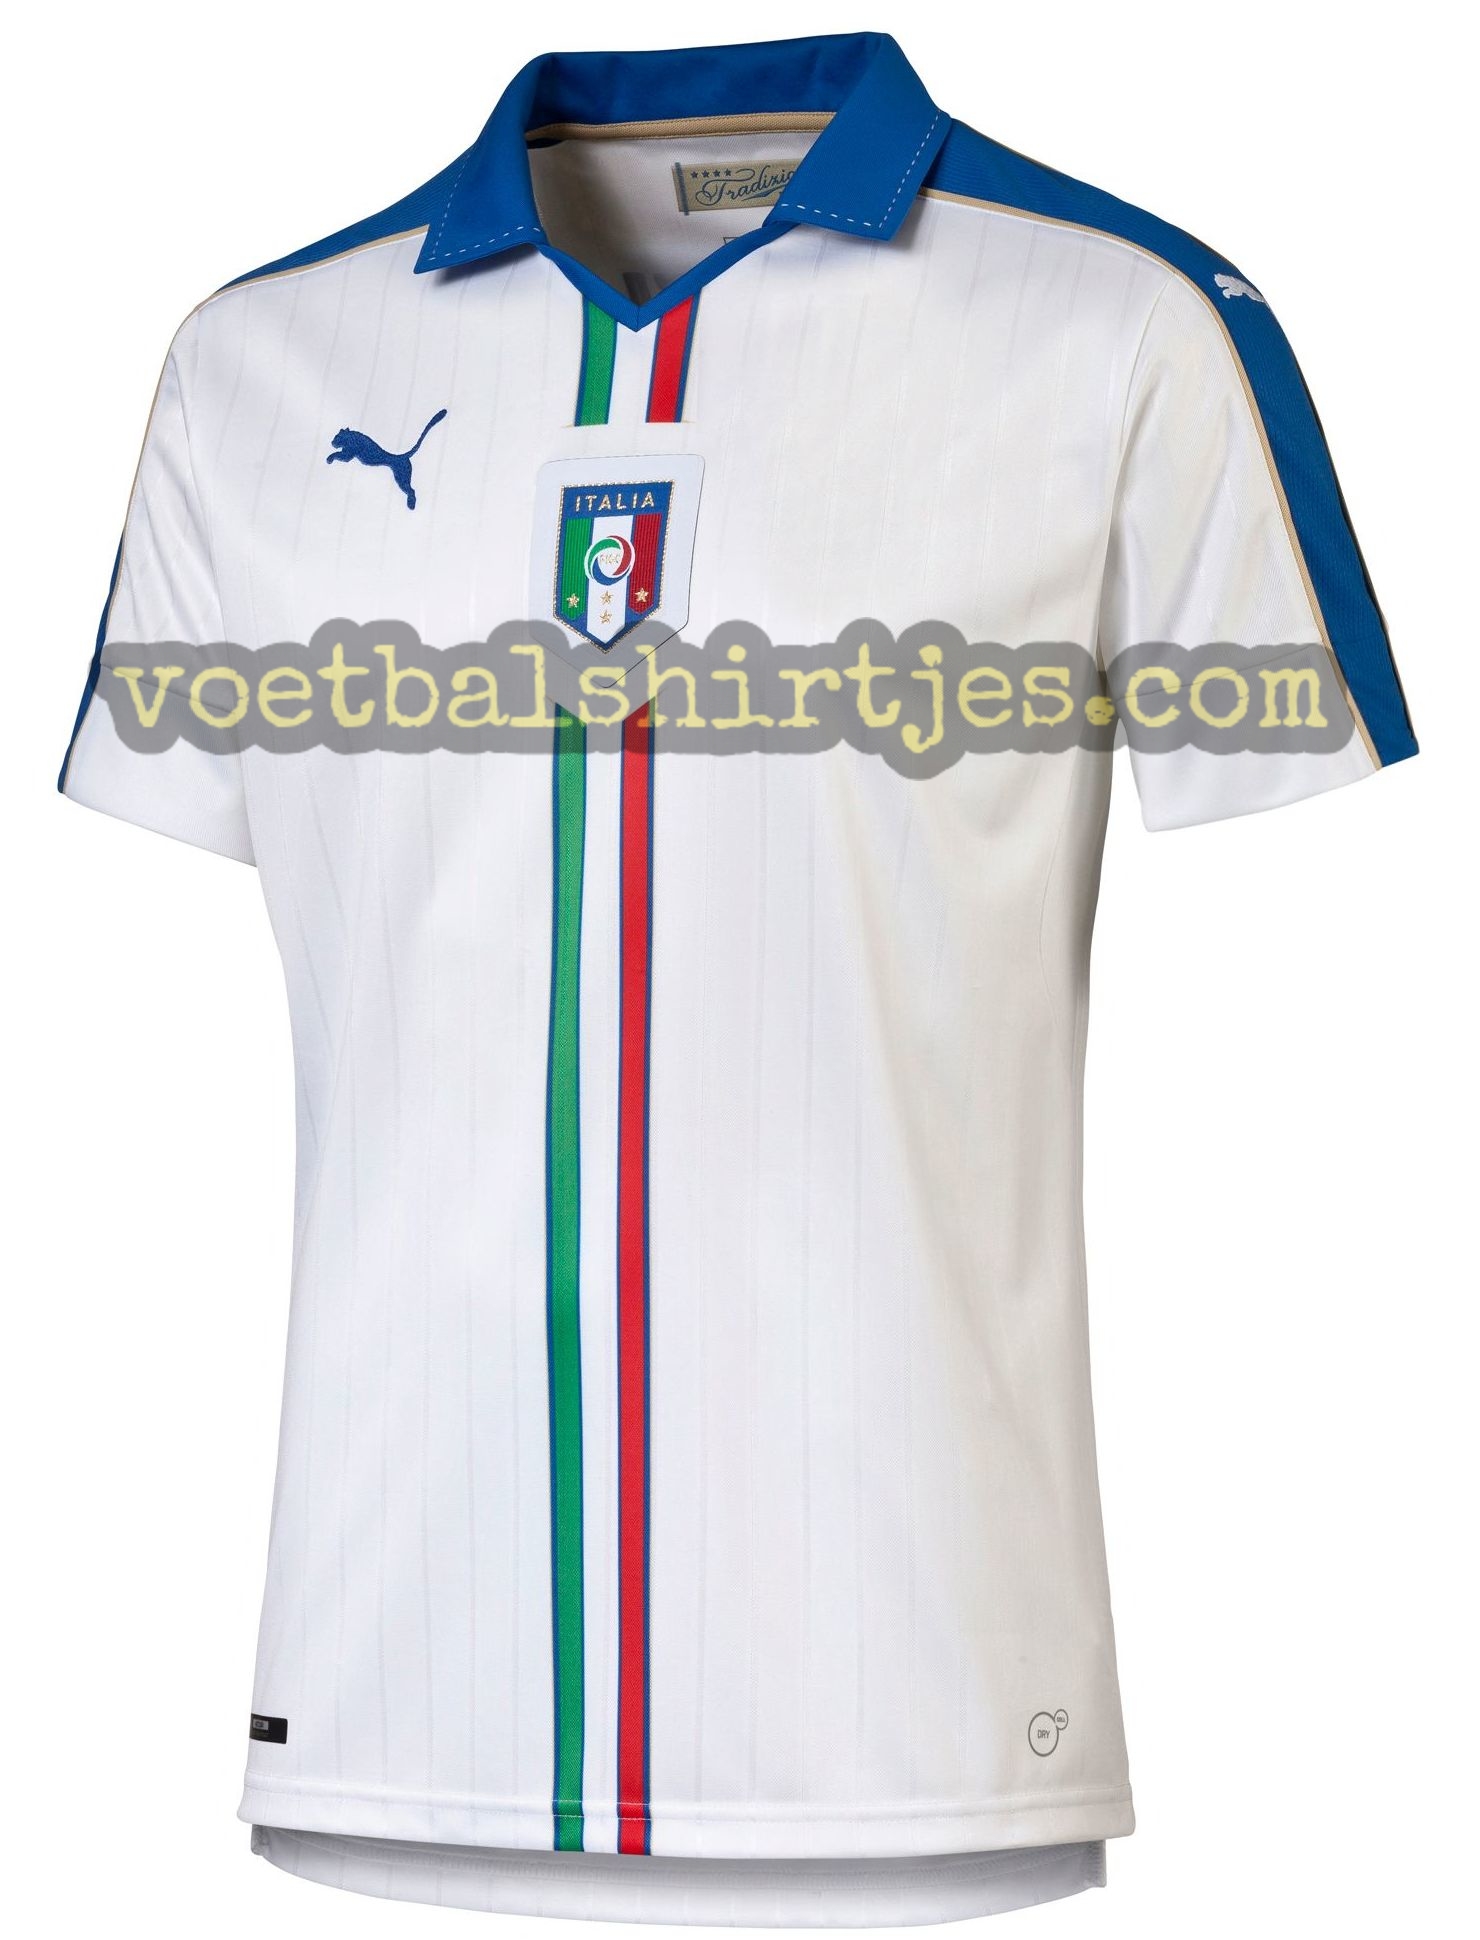 Italië 2015-2016 - Italy Euro 2016 away kit